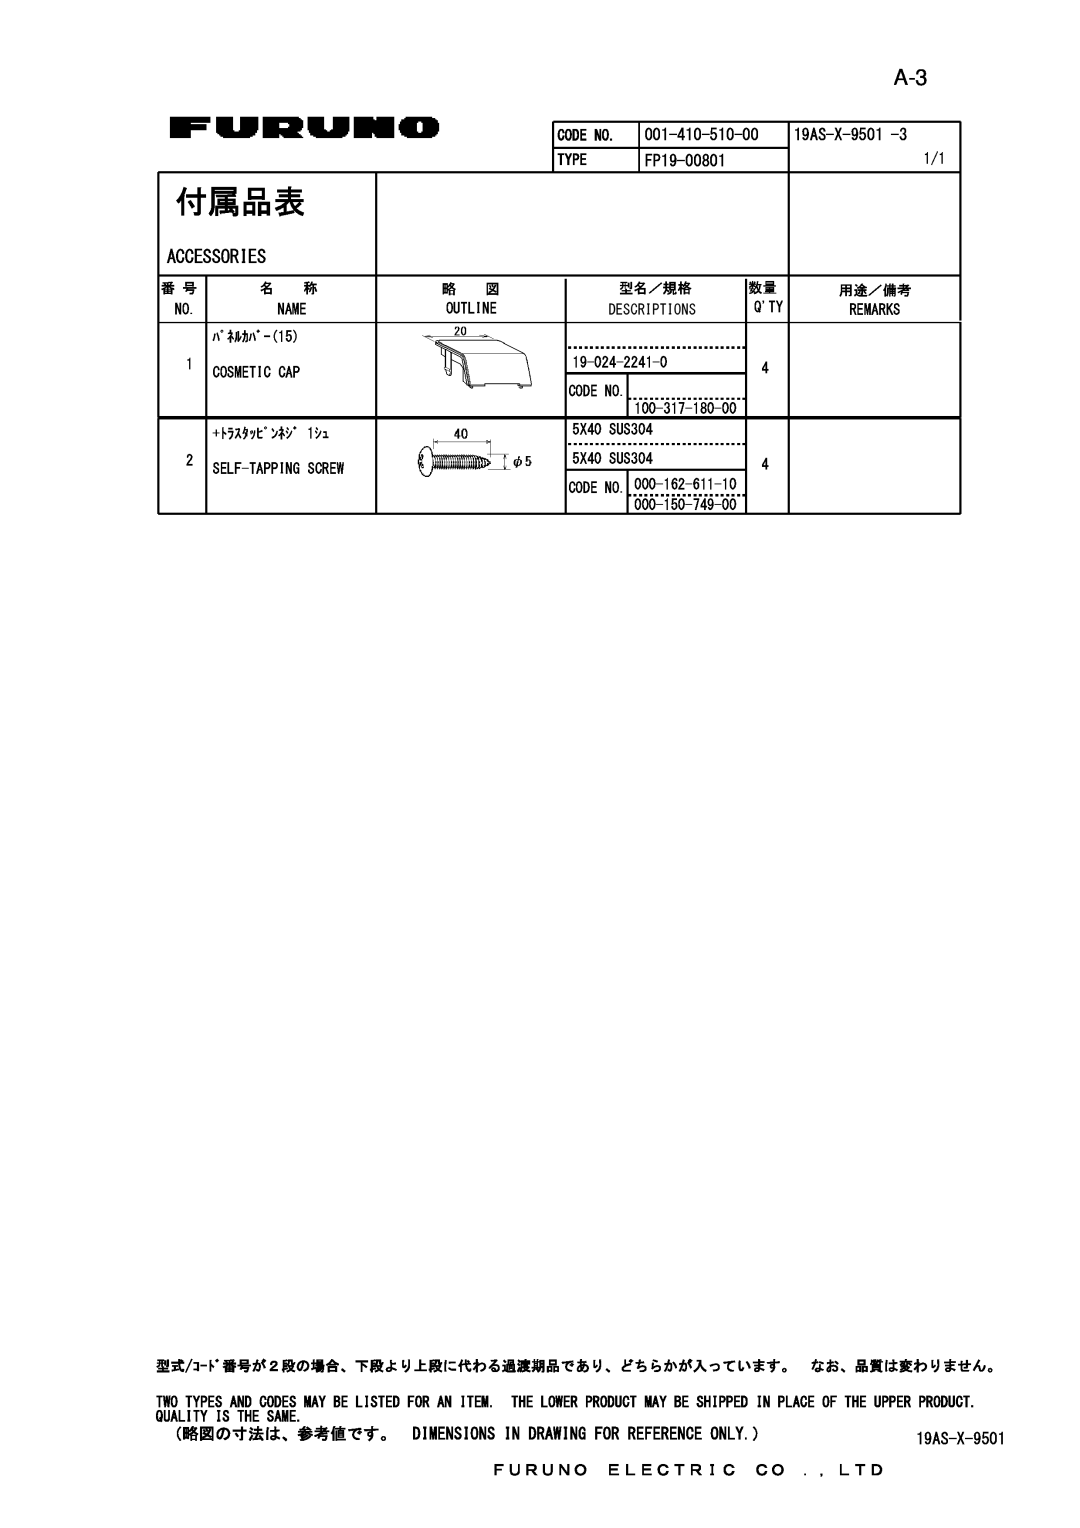 Furuno MU-155C manual 付属品表, Accessories, 001-410-510-00, 19AS-X-9501, FP19-00801, Ｆｕｒｕｎｏ, Ｅｌｅｃｔｒｉｃ, Ｃｏ ．，Ｌｔｄ, Type 